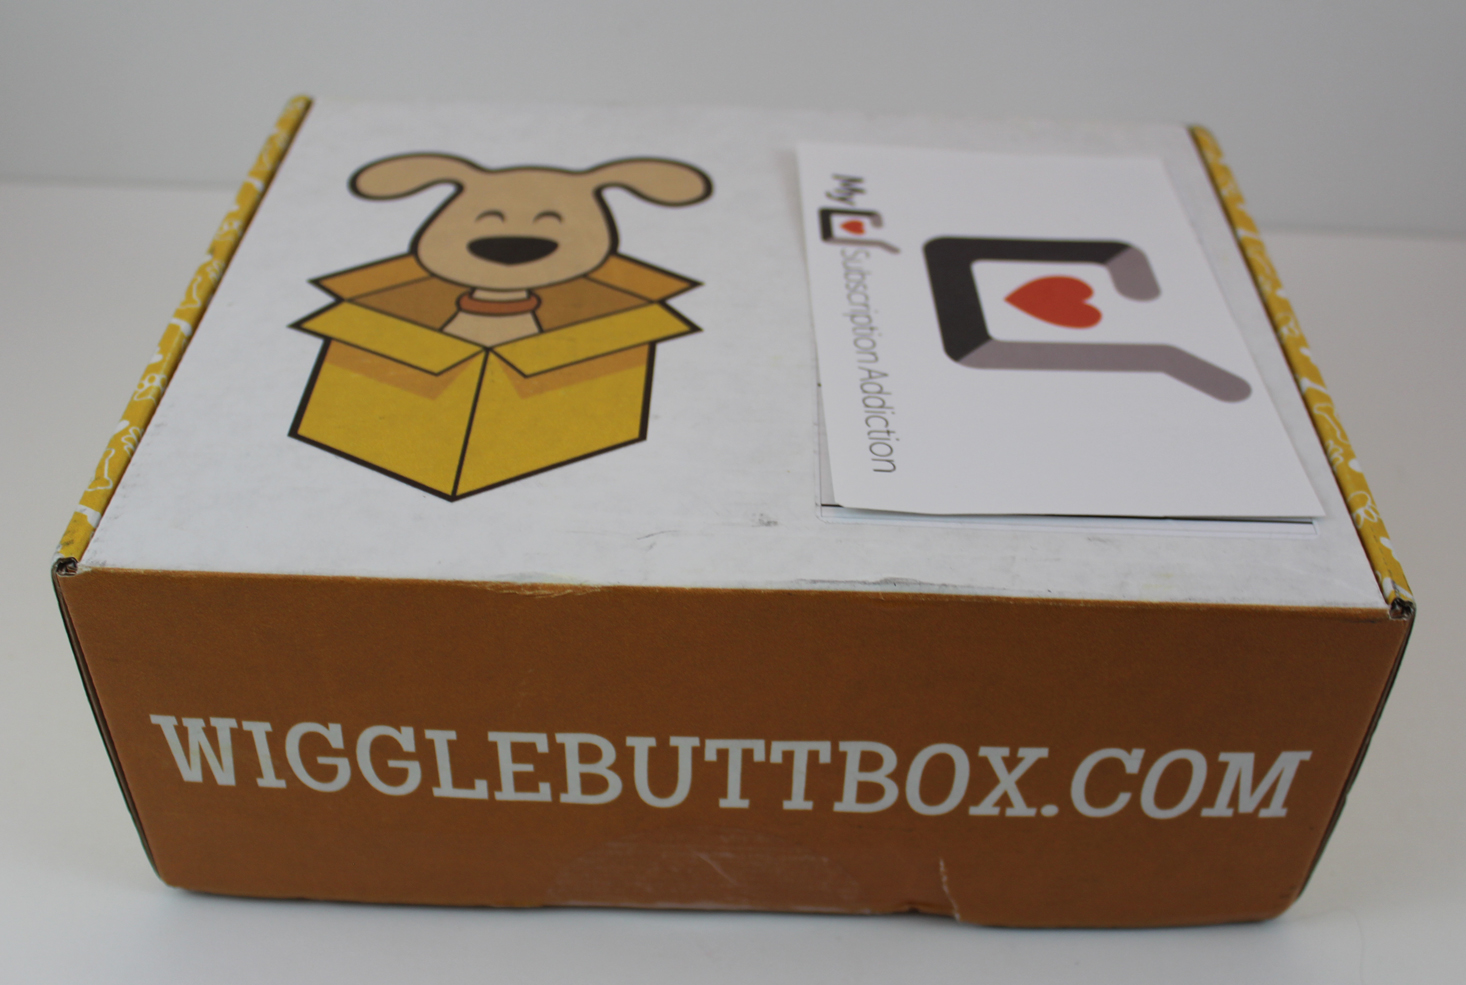 Wigglebutt Box Dog Subscription Review + Coupon – November 2017